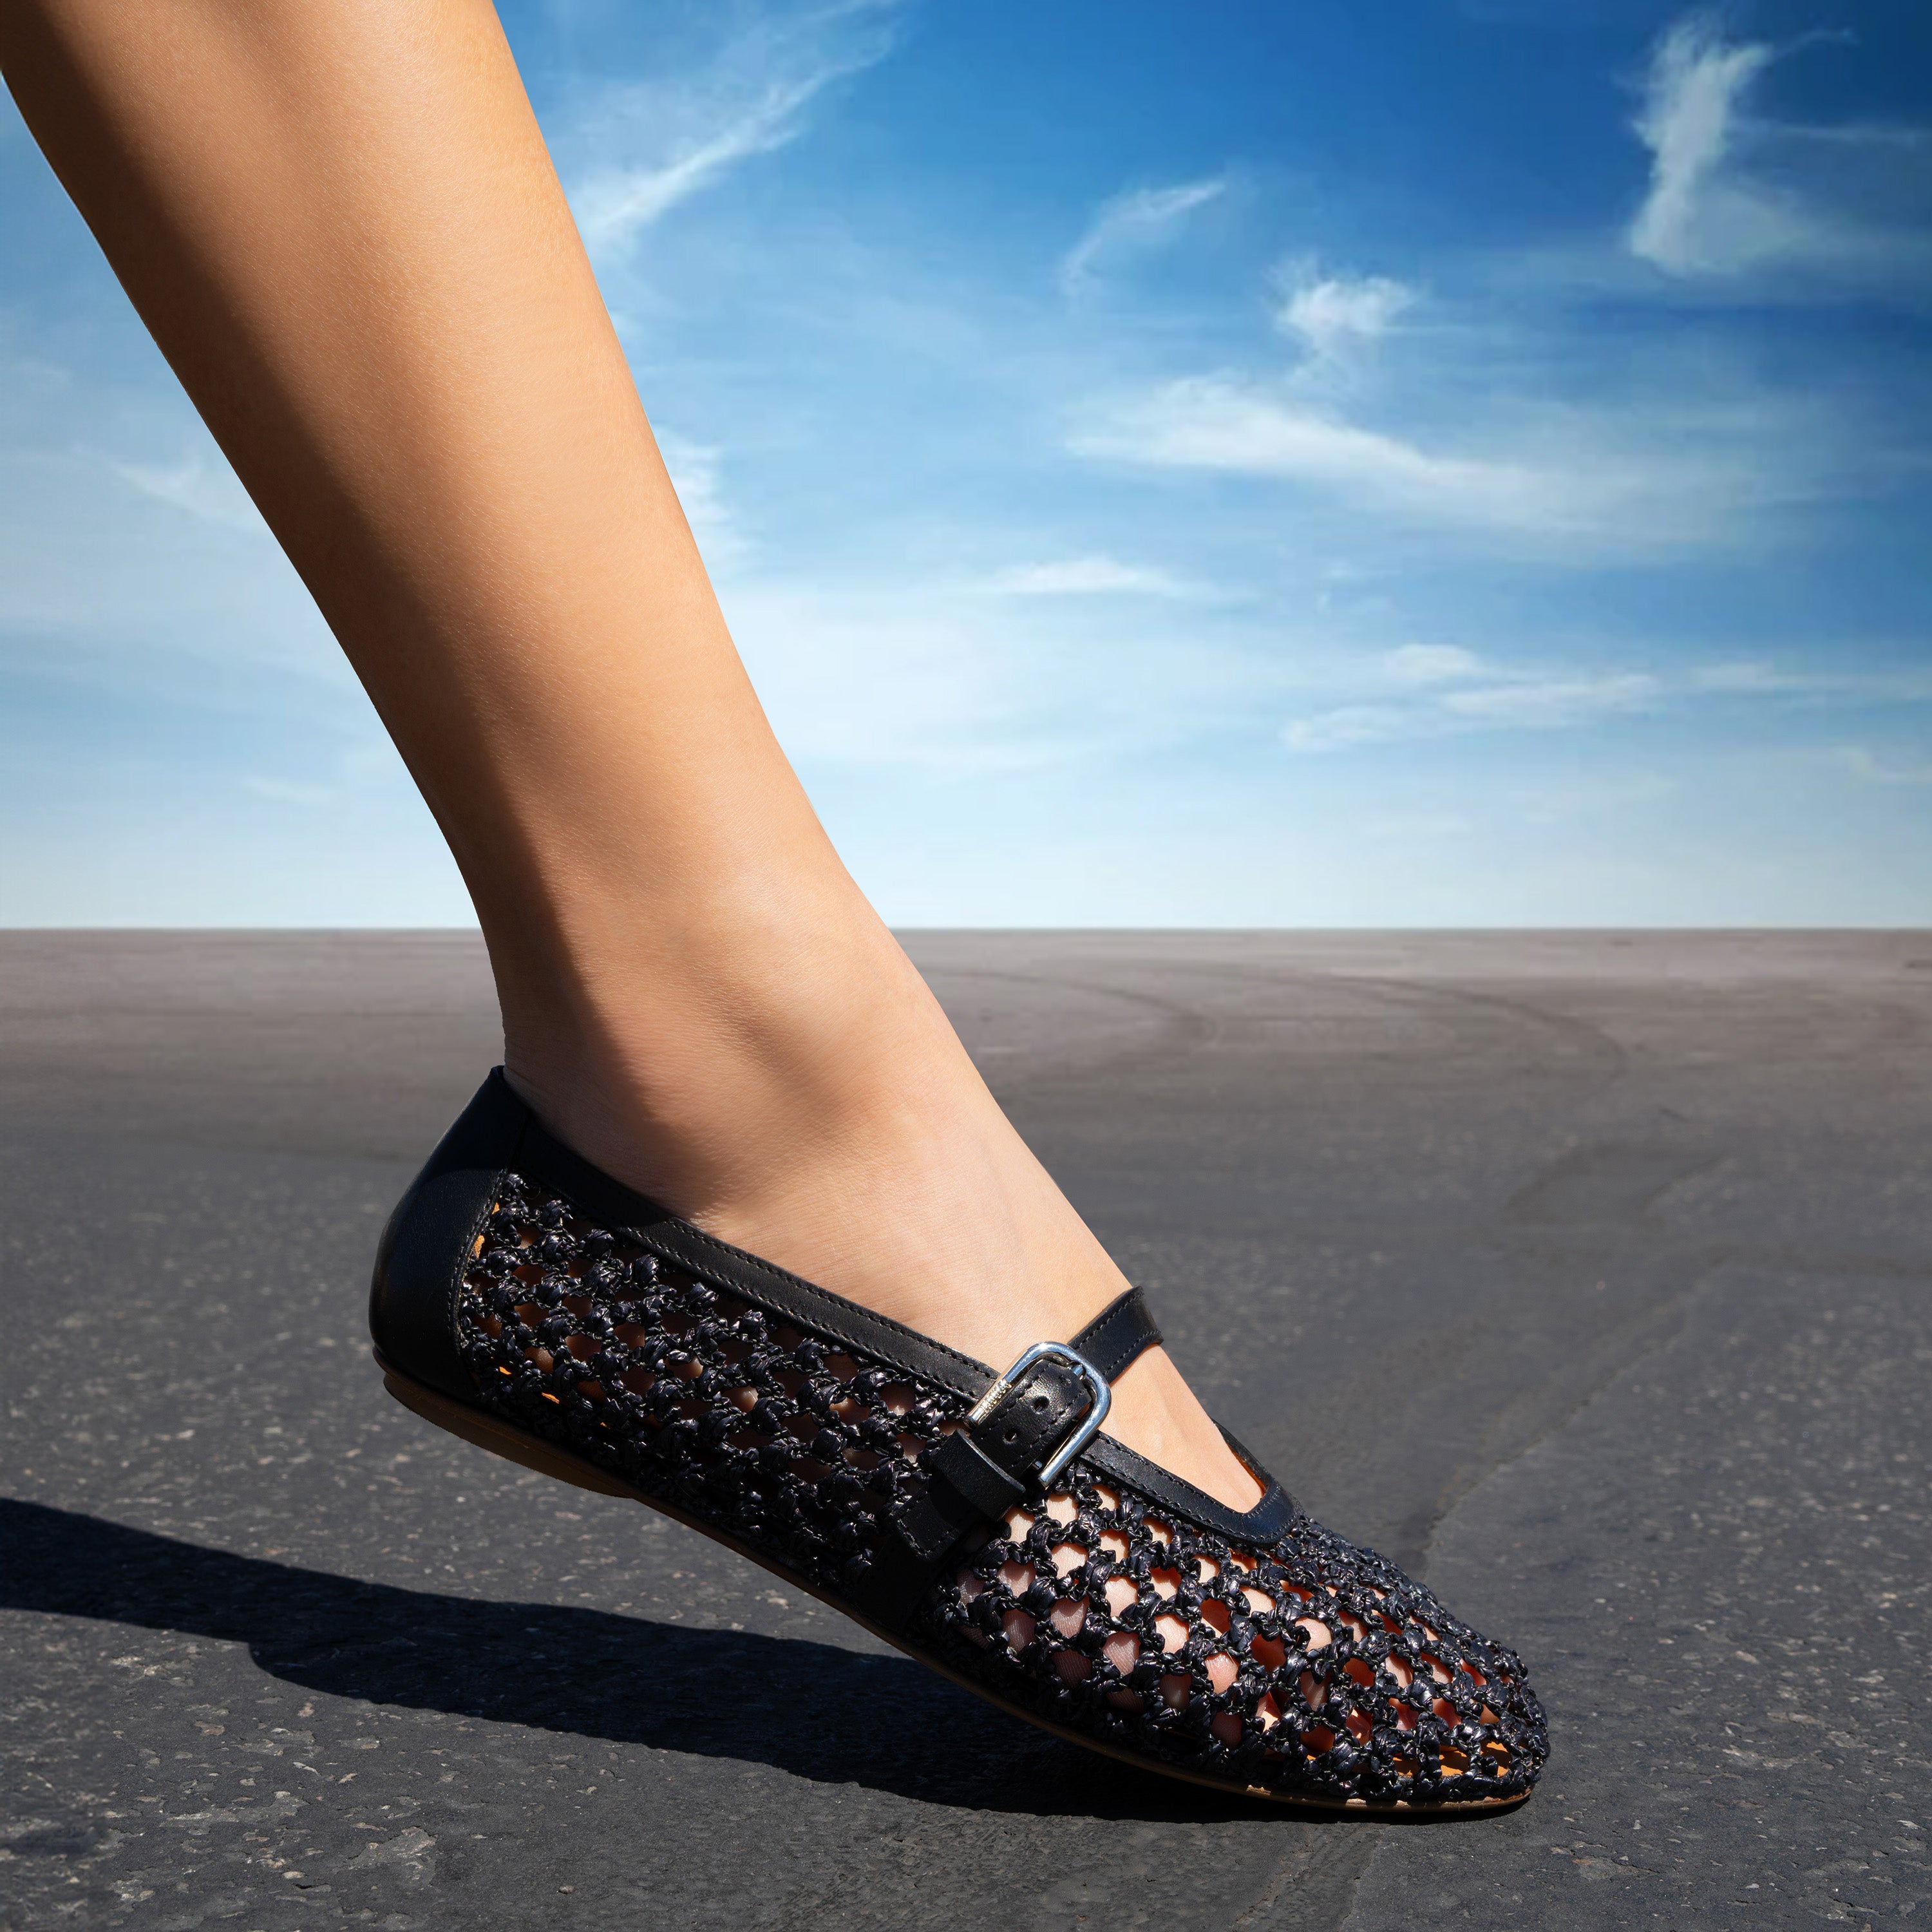 A woman's leg wearing a sparkling black flat shoe on a desert road.